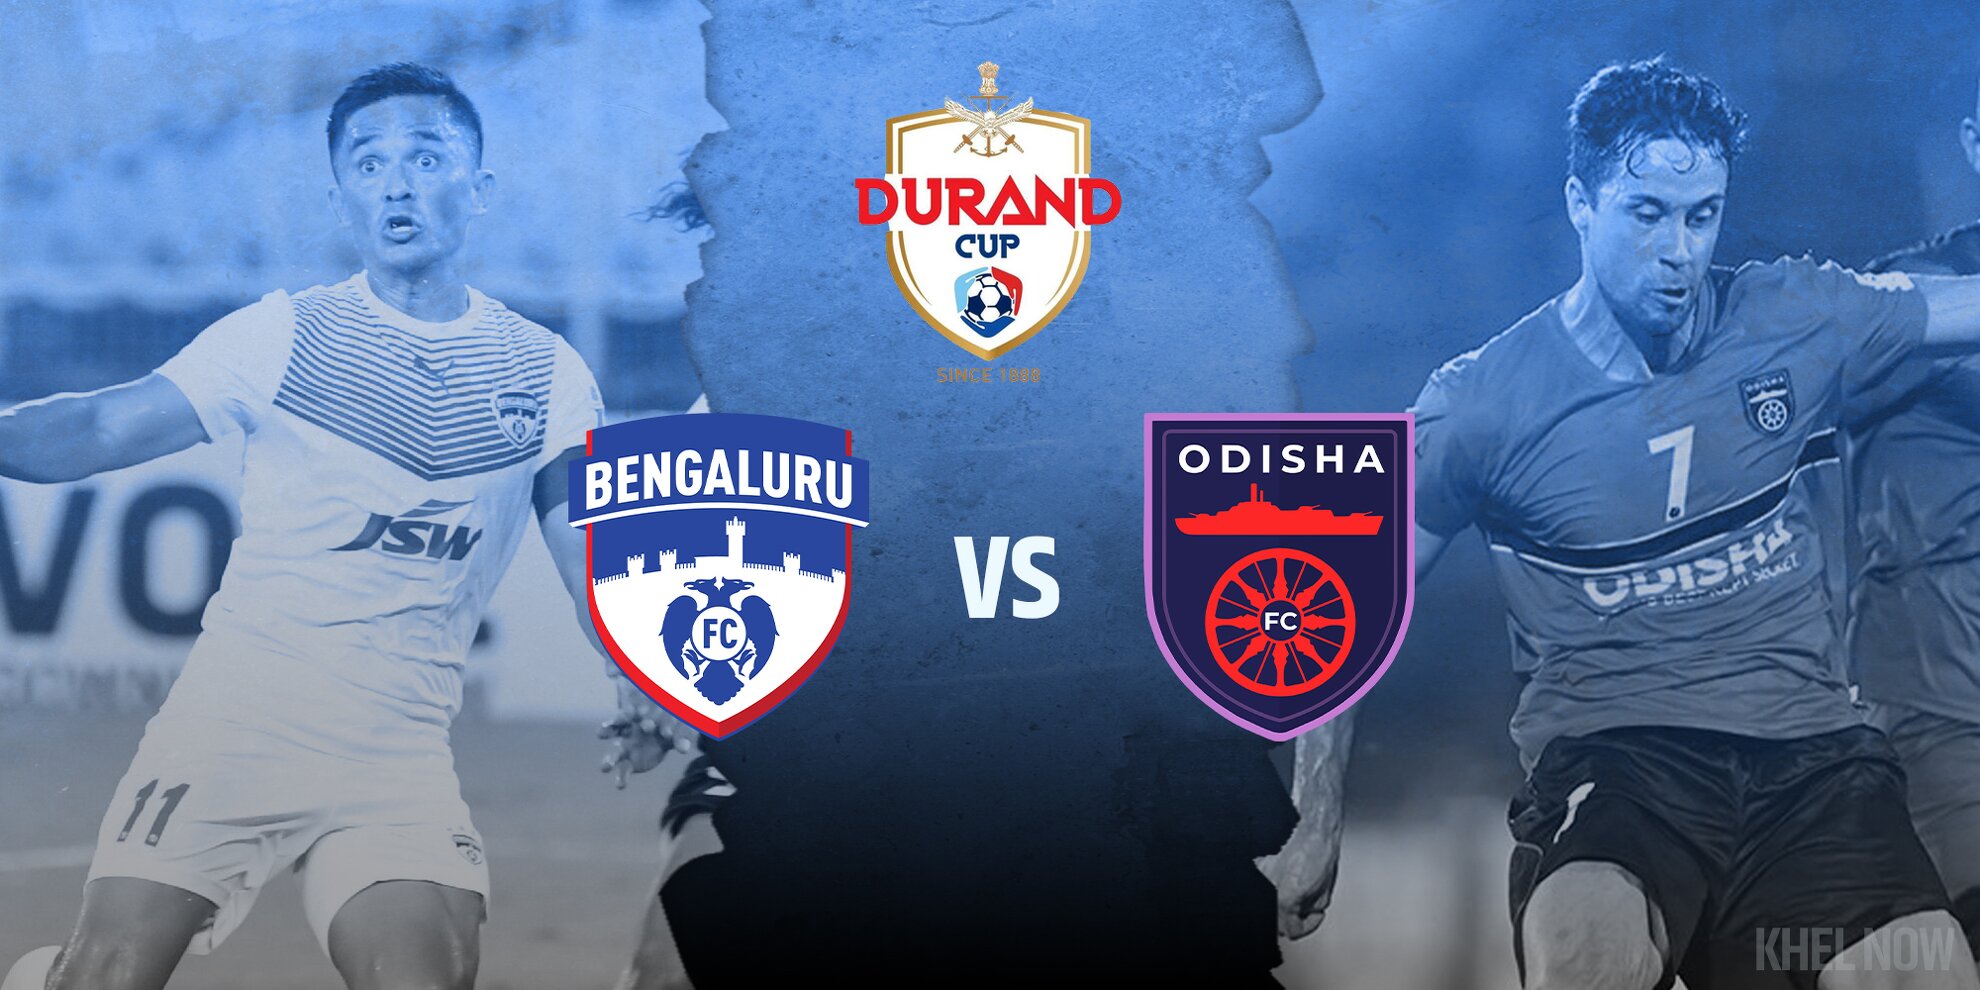 Bengaluru FC Odisha FC Durand Cup 2022